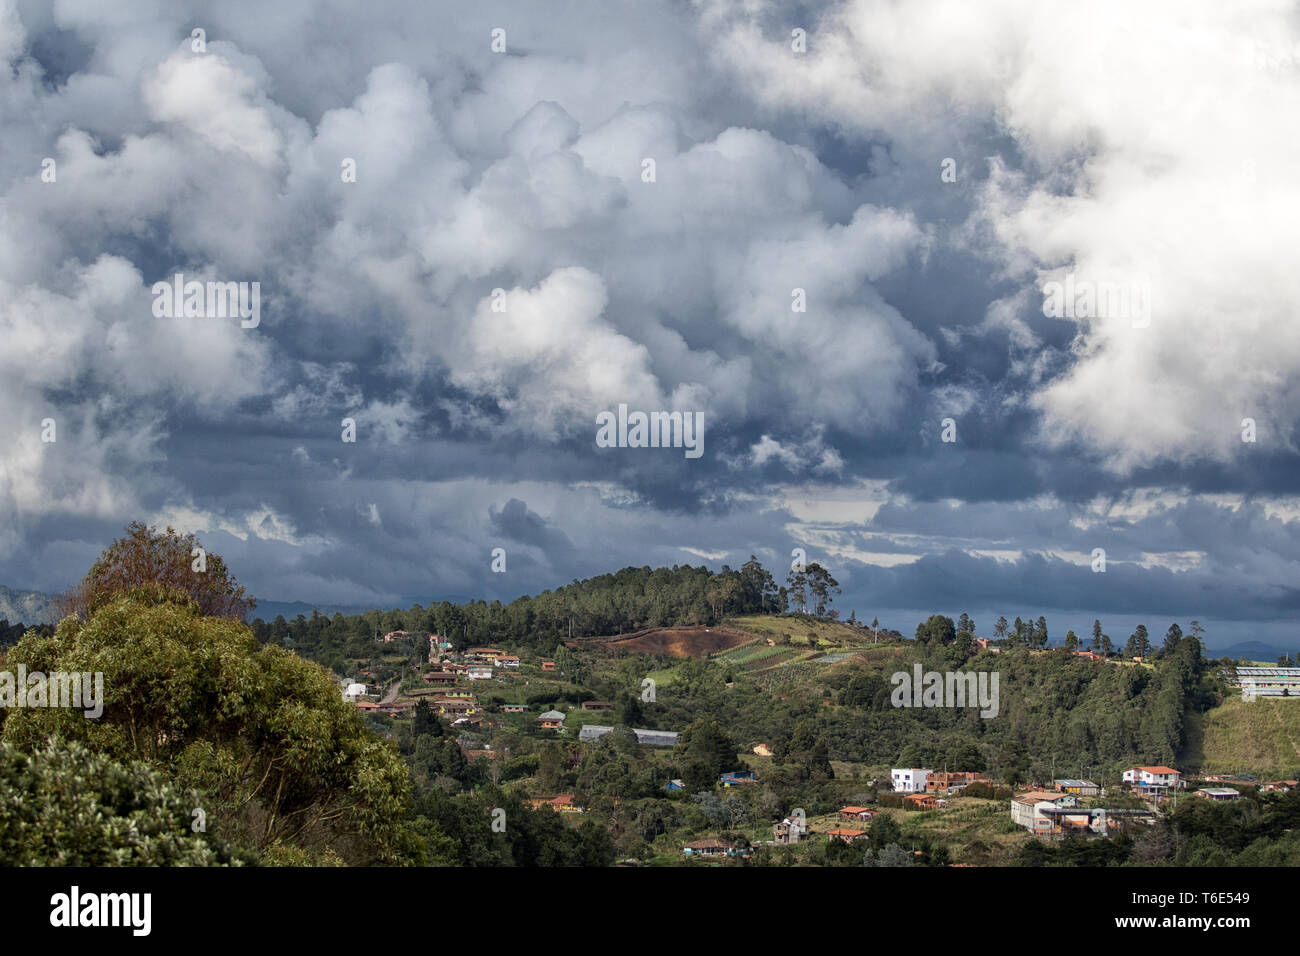 cloudy sky over Santa Elana, Medellin, Colombia Stock Photo